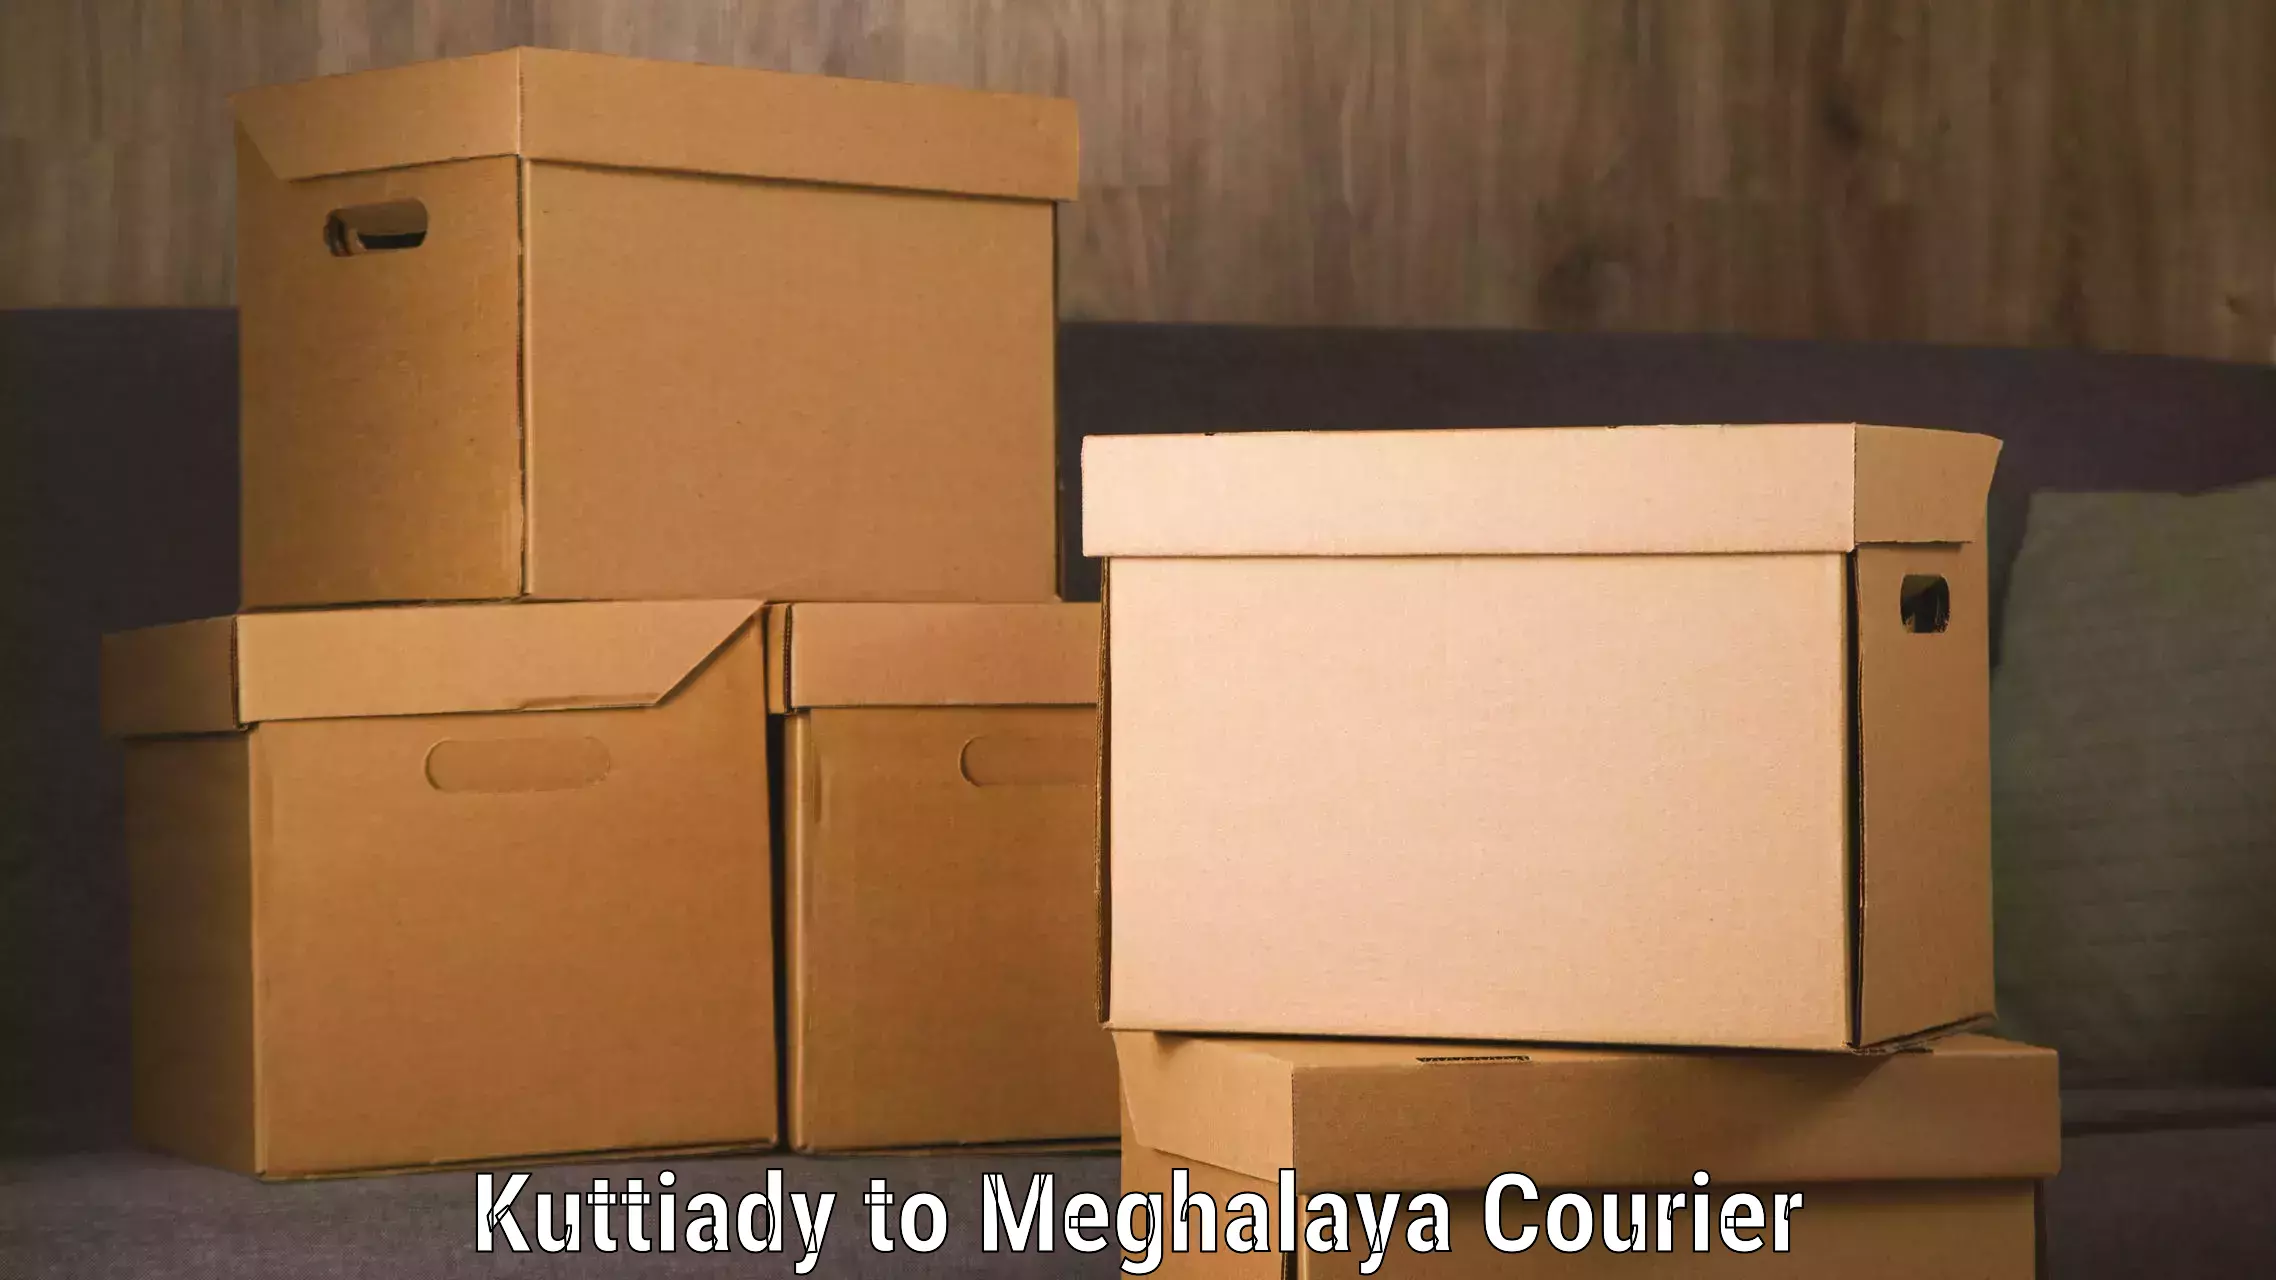 Courier service partnerships Kuttiady to Tura